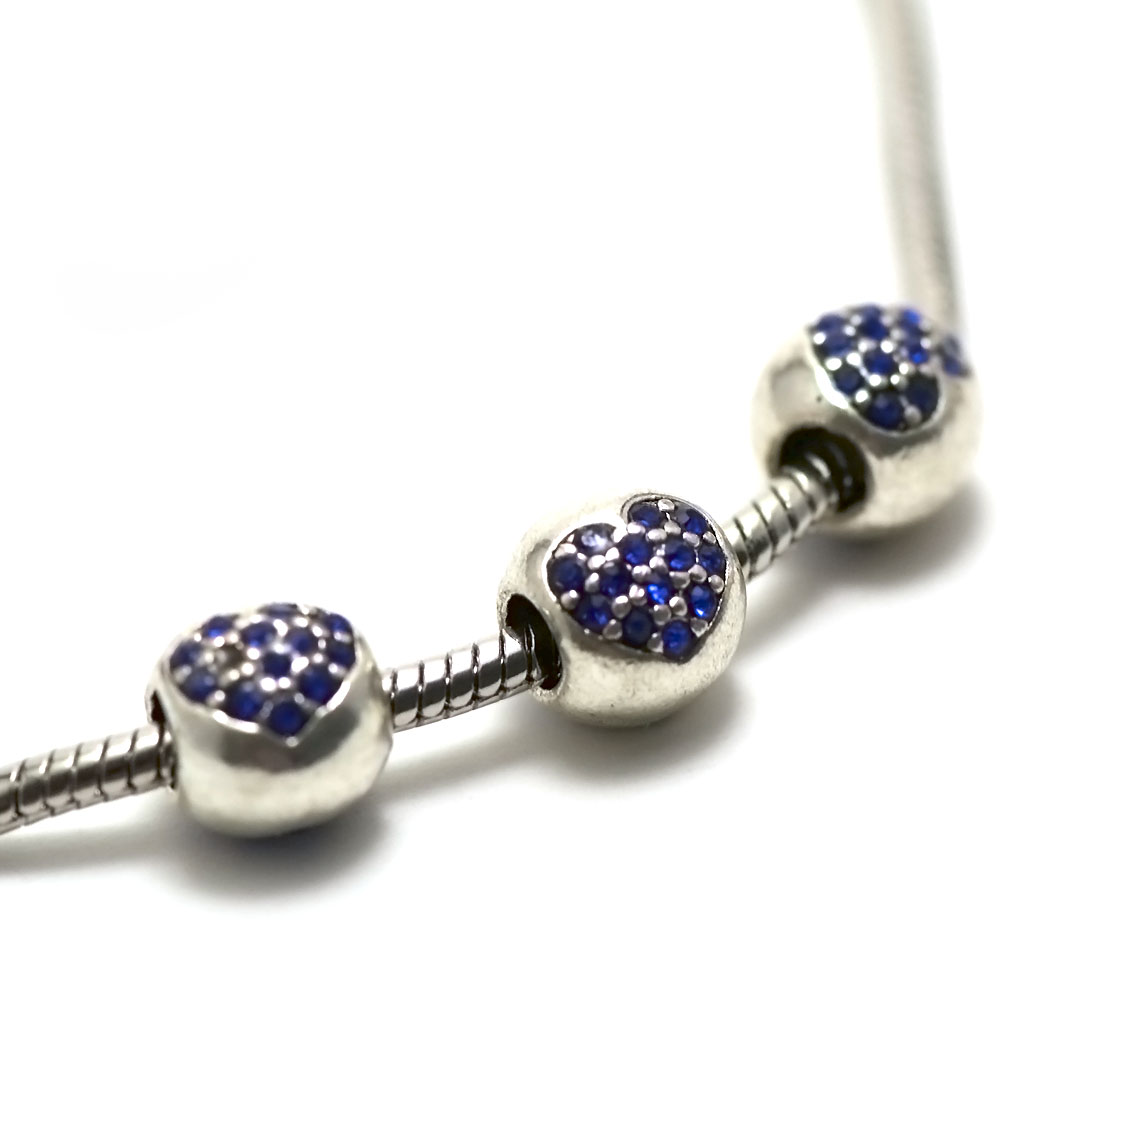 2 magnifiques perles multiples strass coeur à grand trou 5 mm ,bleu sapphir,argent vieillie